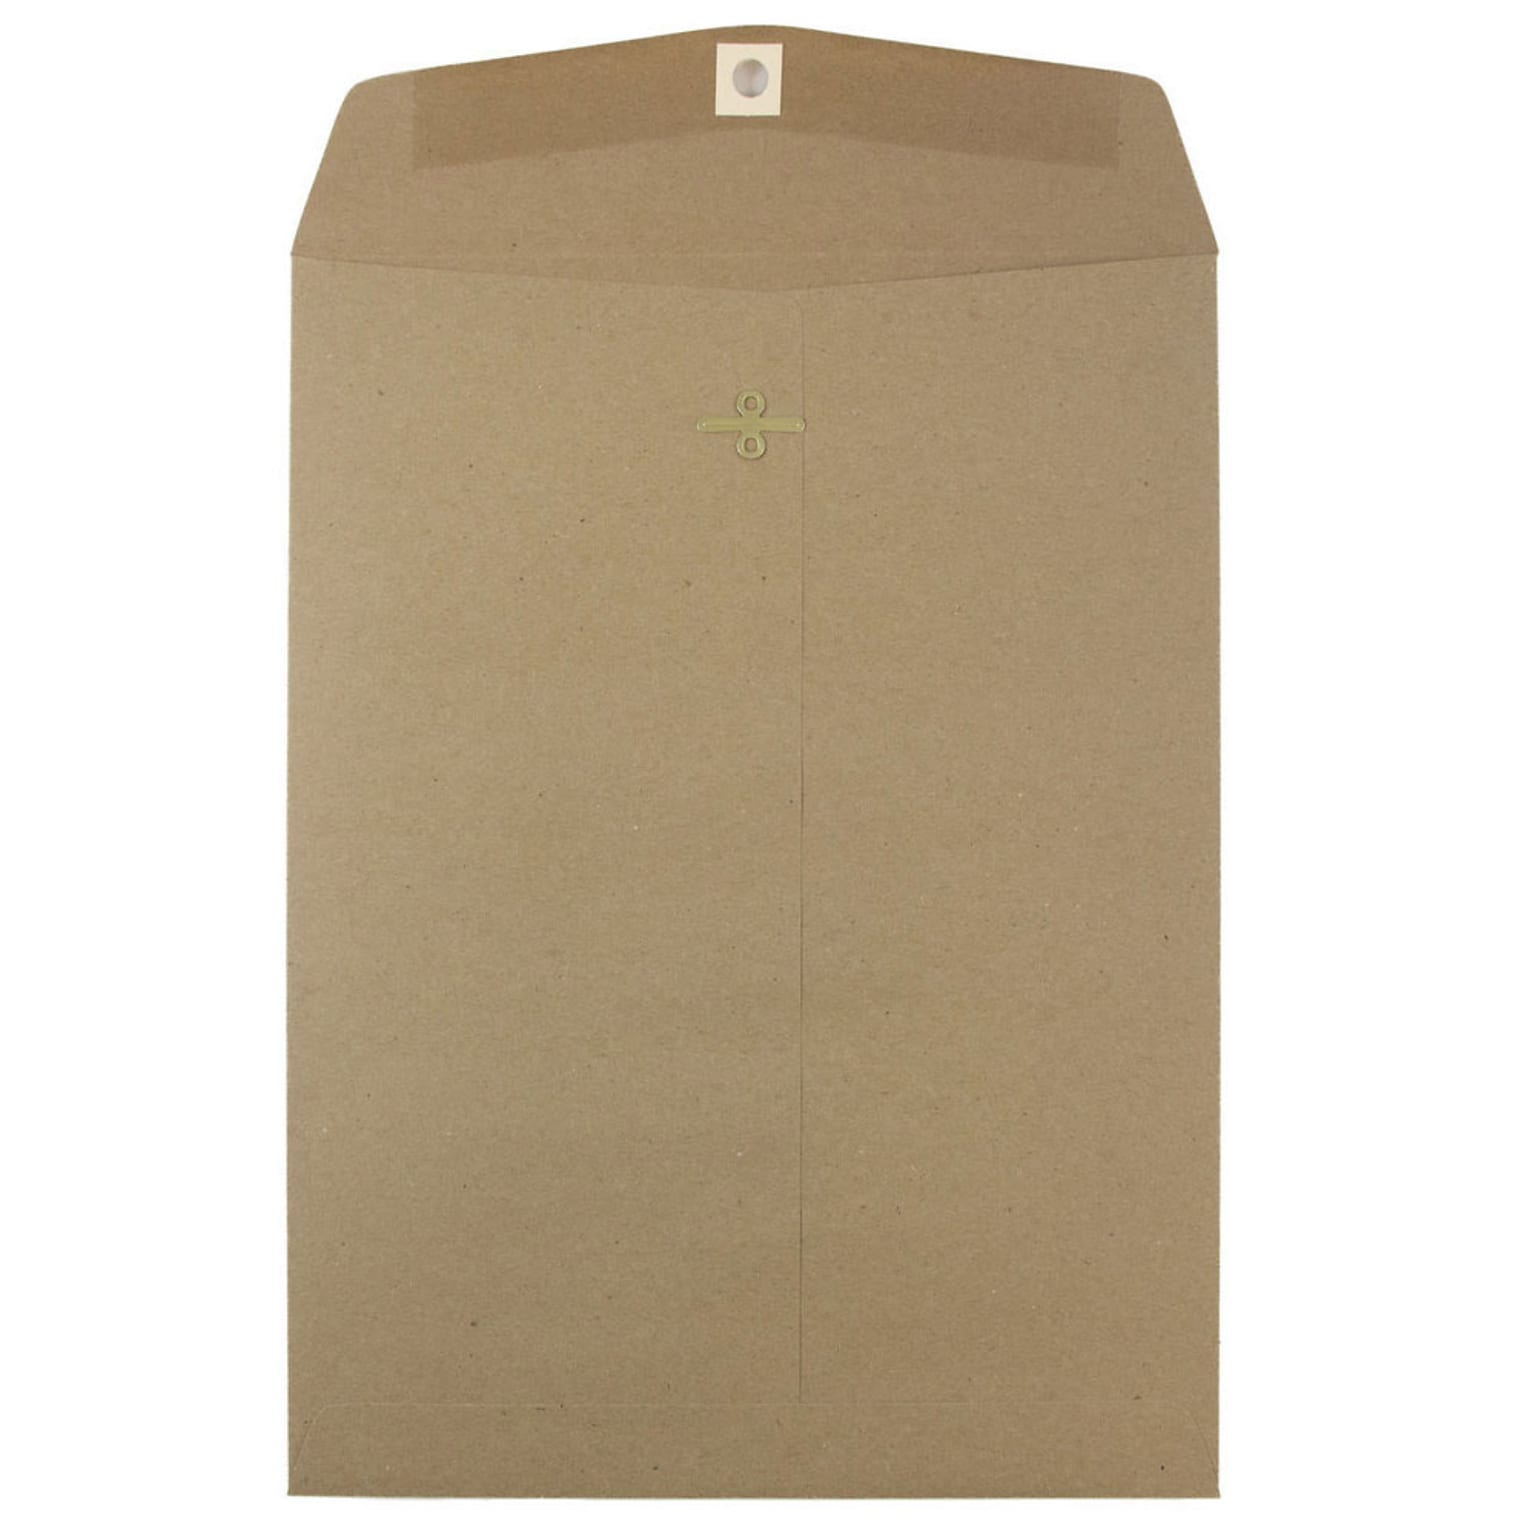 JAM Paper 9 x 12 Kraft Open End Catalog Envelopes with Clasp Closure, Brown Kraft Paper Bag, 100/Pack (563120849B)